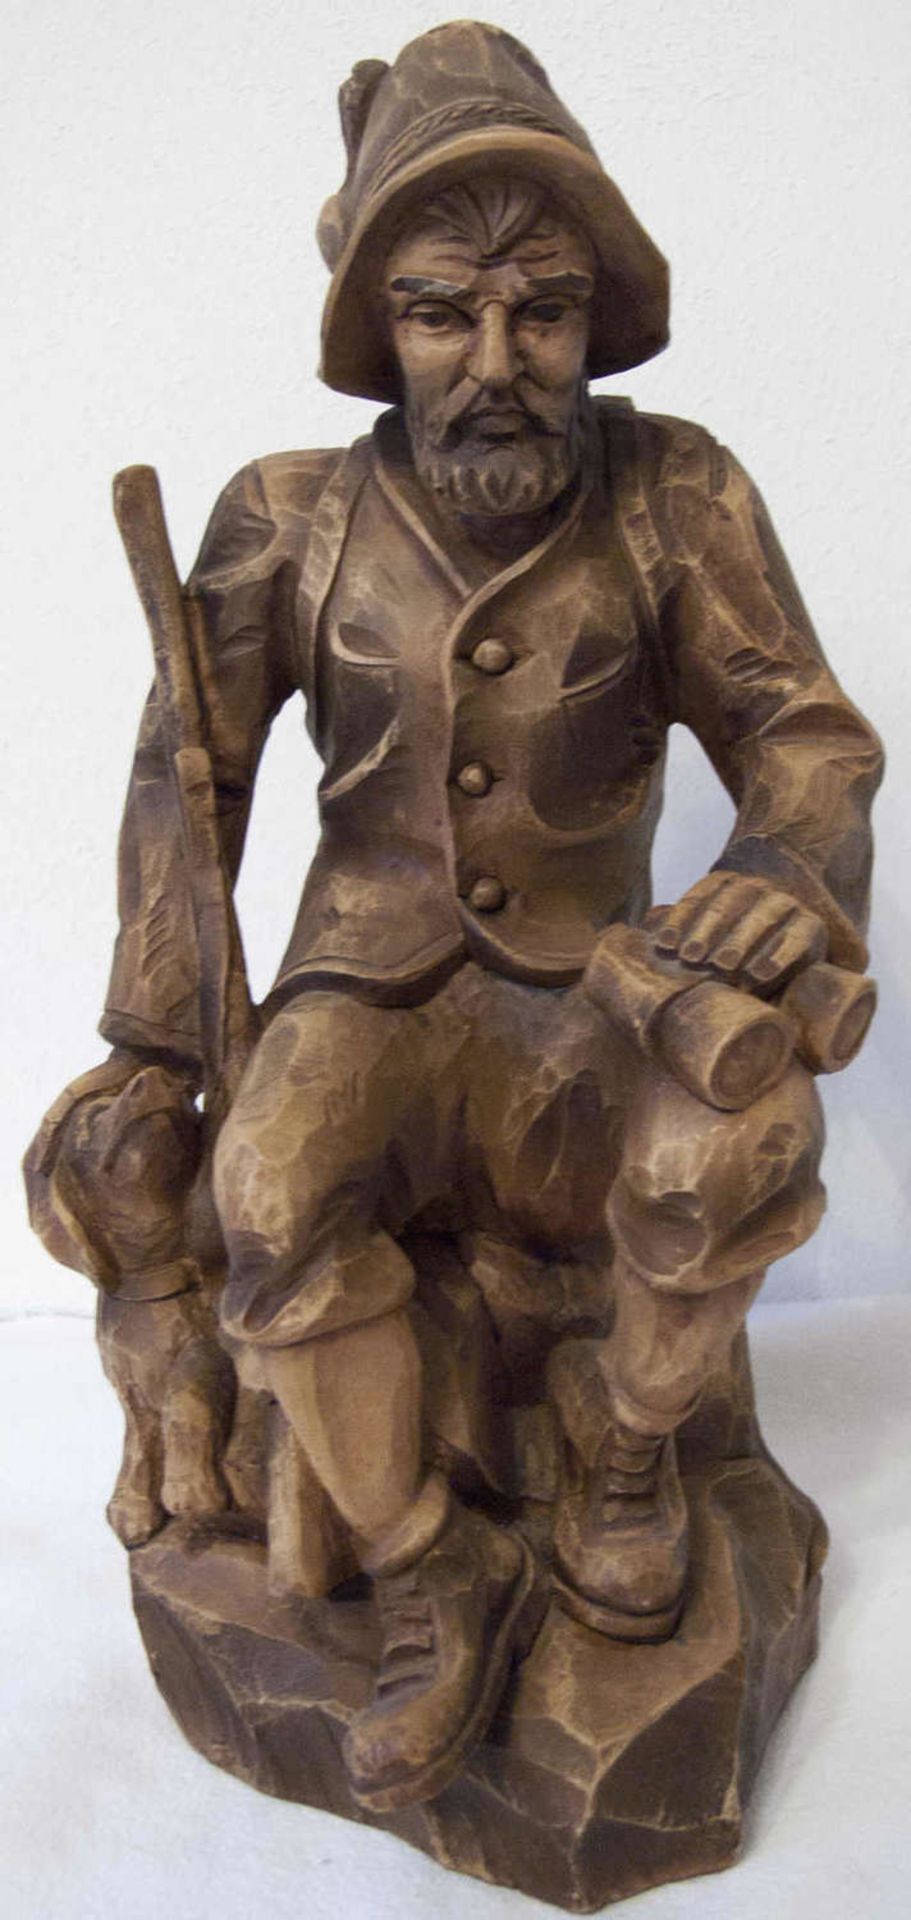 Holz - Skulptur "Jäger, sitzend". Massiv - Holz, handgeschnitzt. Höhe: ca. 38 cm. Mit Echtheits -